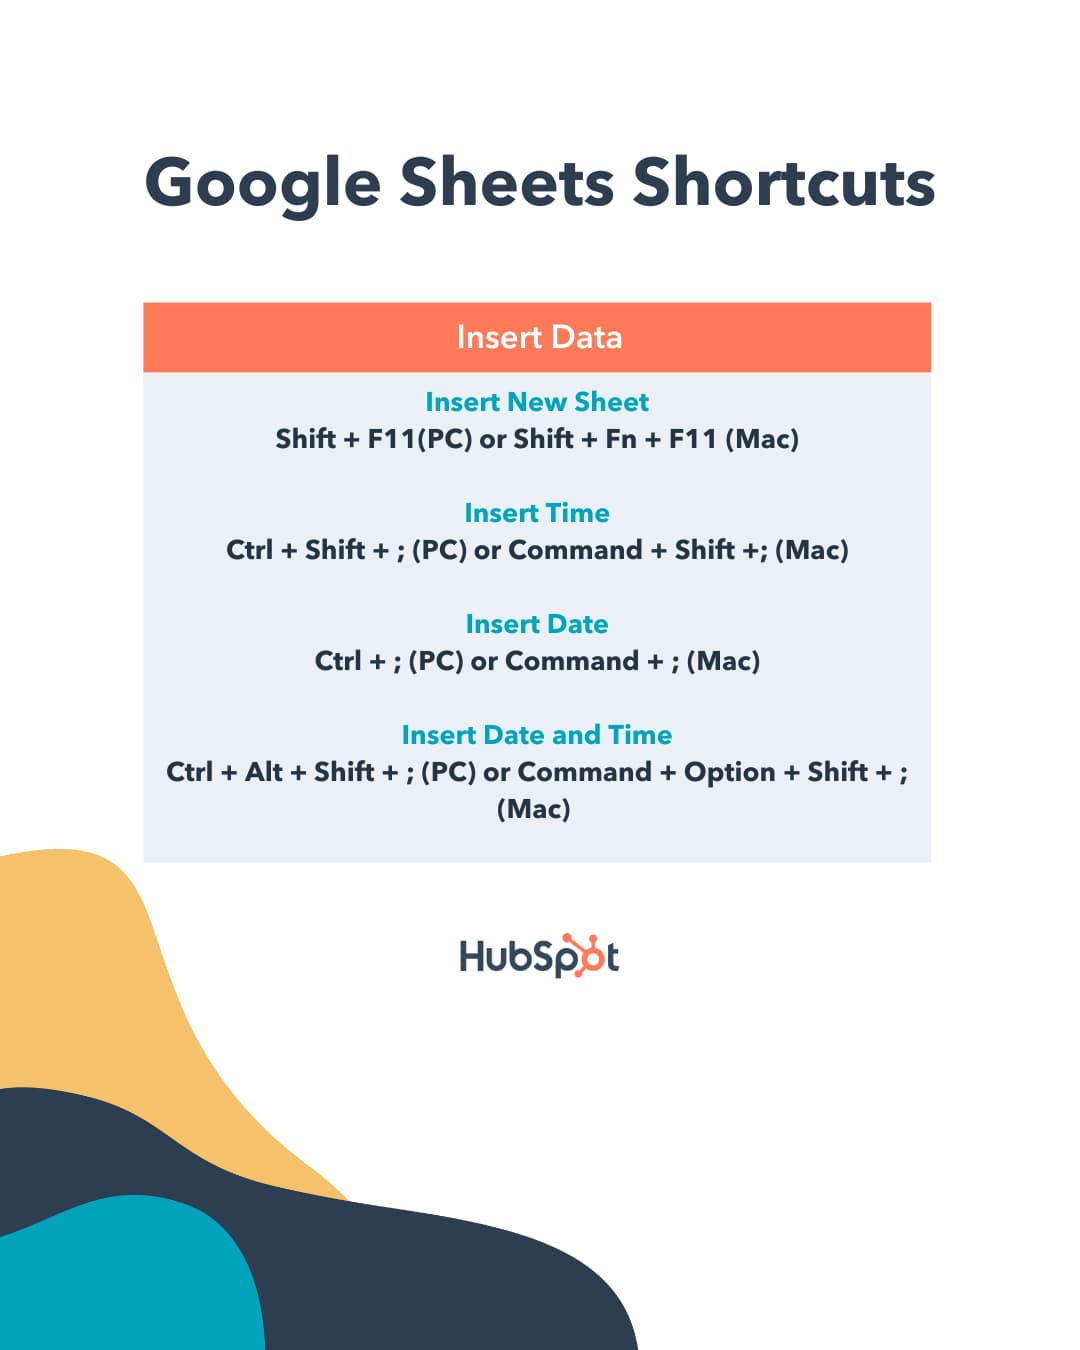 Insert new sheet, insert time, insert date, and insert date and time using Google Sheets shortcuts 